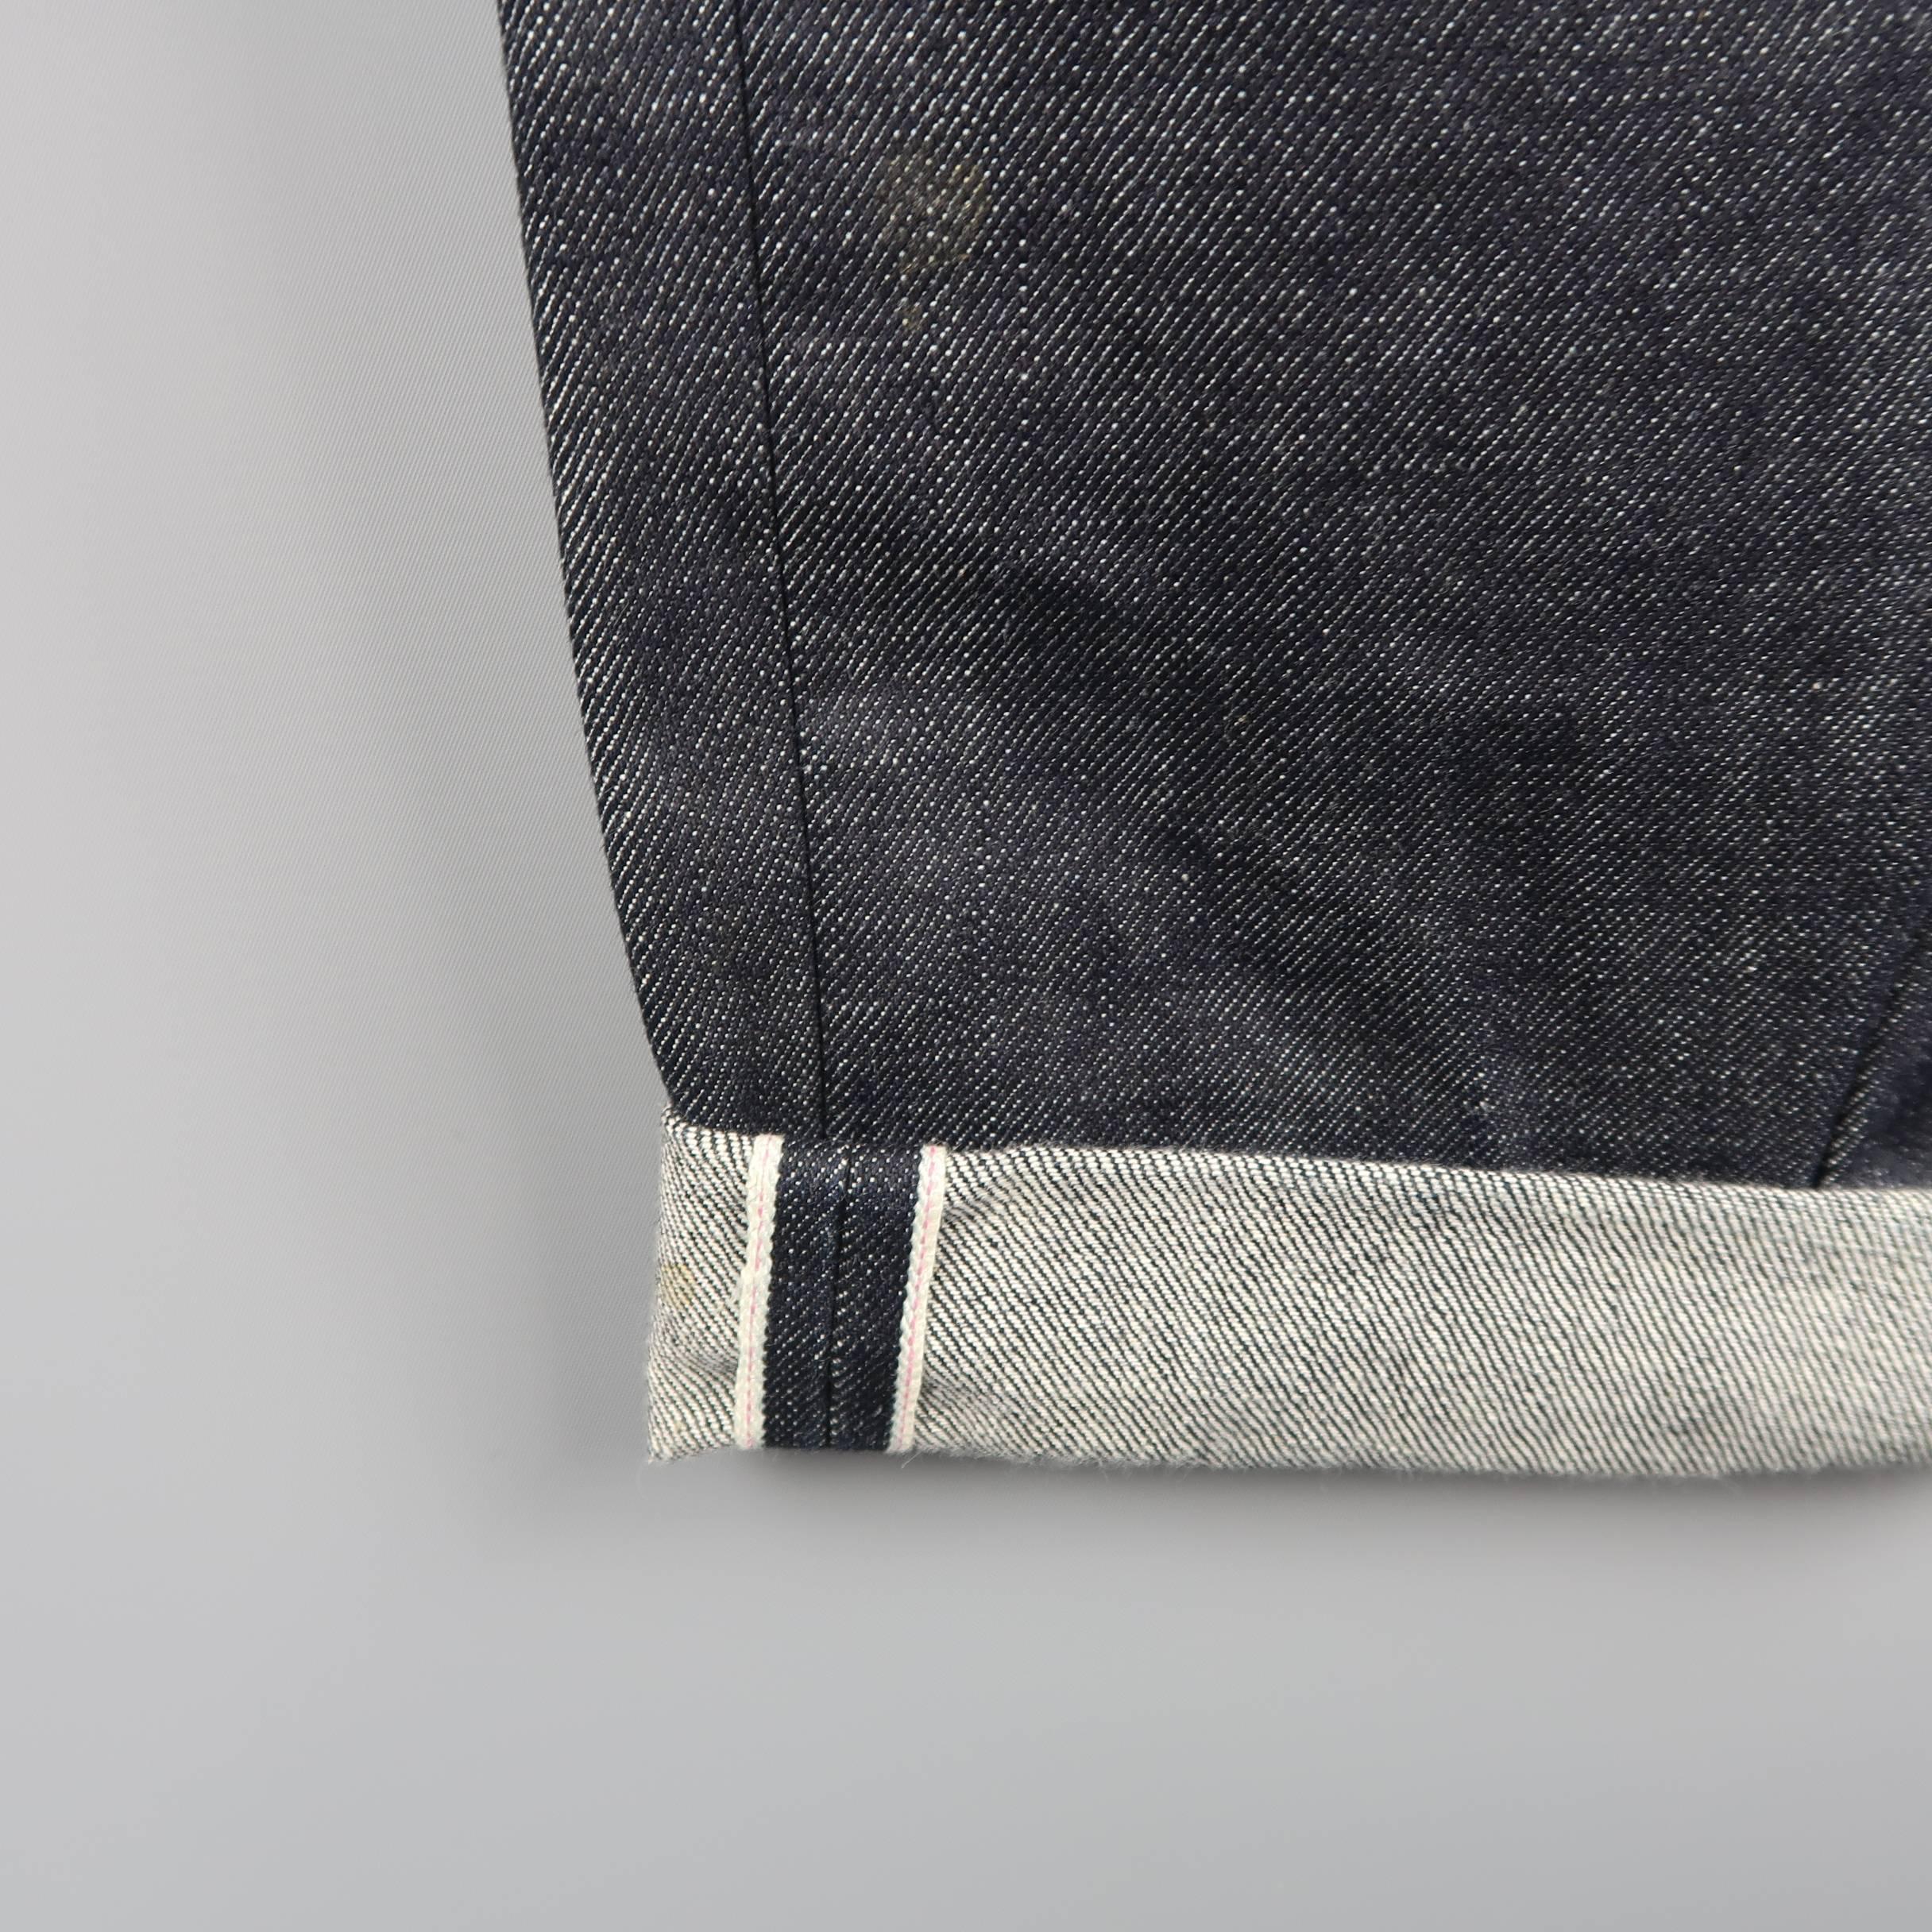 Black Men's 3SIXTEEN Size 30 Indigo Contrast Stitch Raw Selvedge Denim Jeans